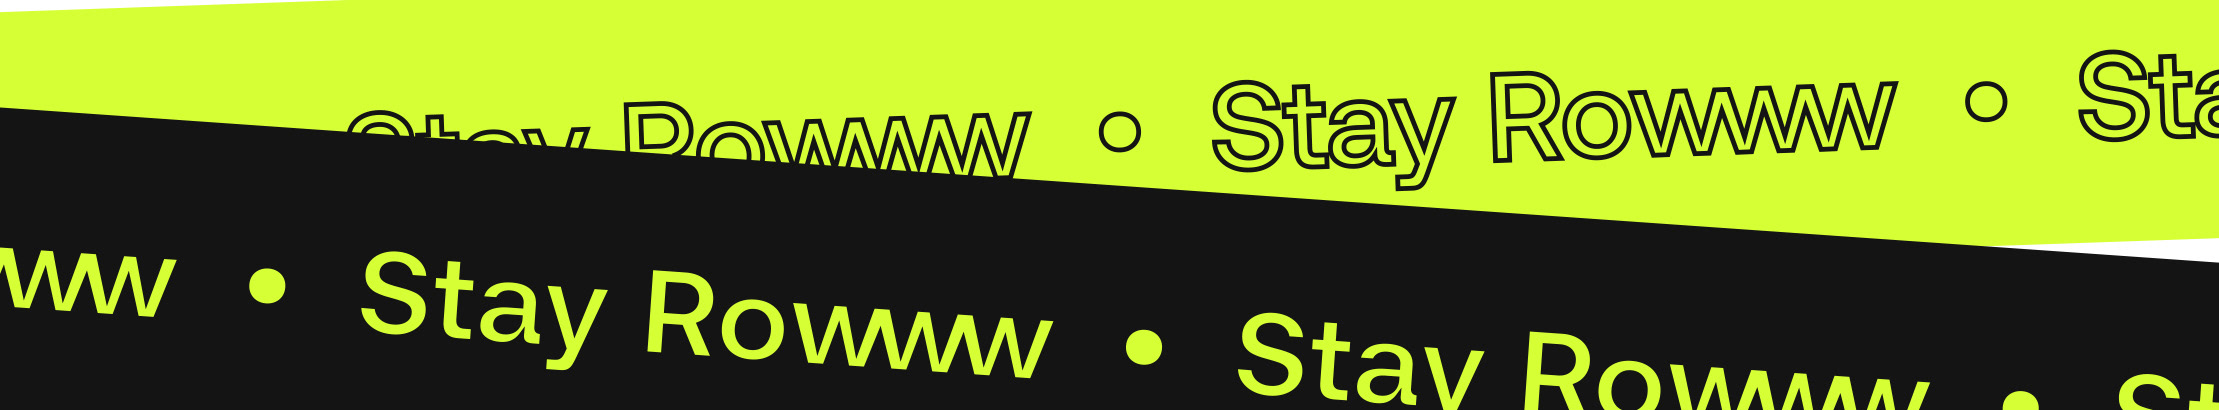 Banner de perfil de Rowww Design